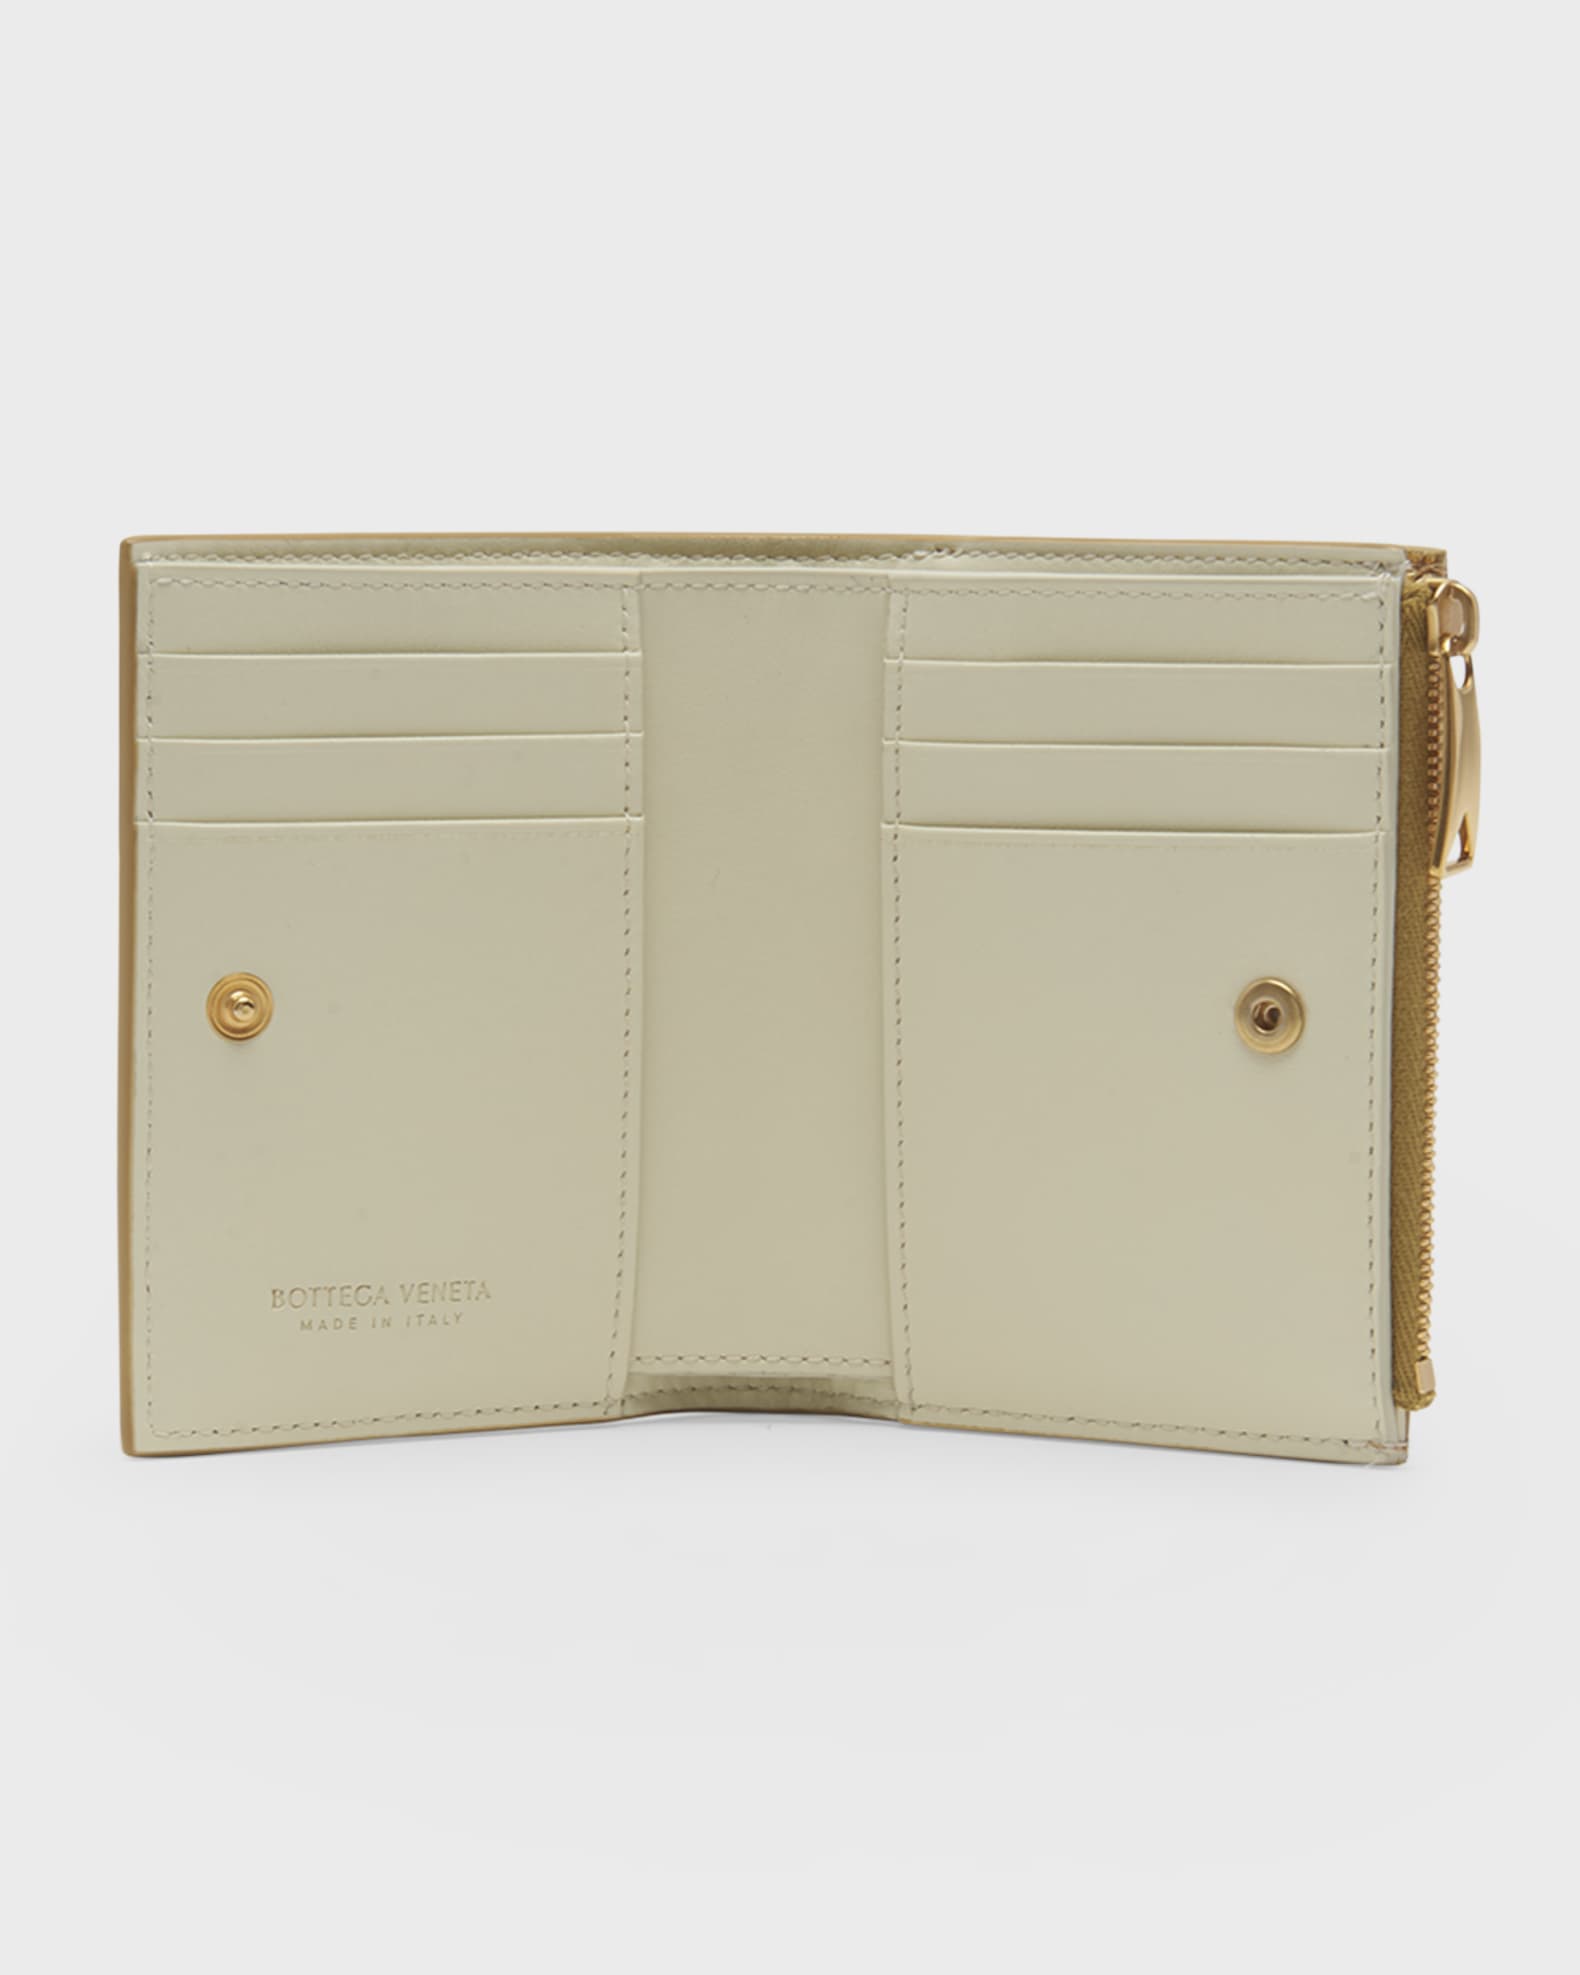 Bottega Veneta® Women's Small Cassette Compact Zip Around Wallet in Taupe  Grey. Shop online now.